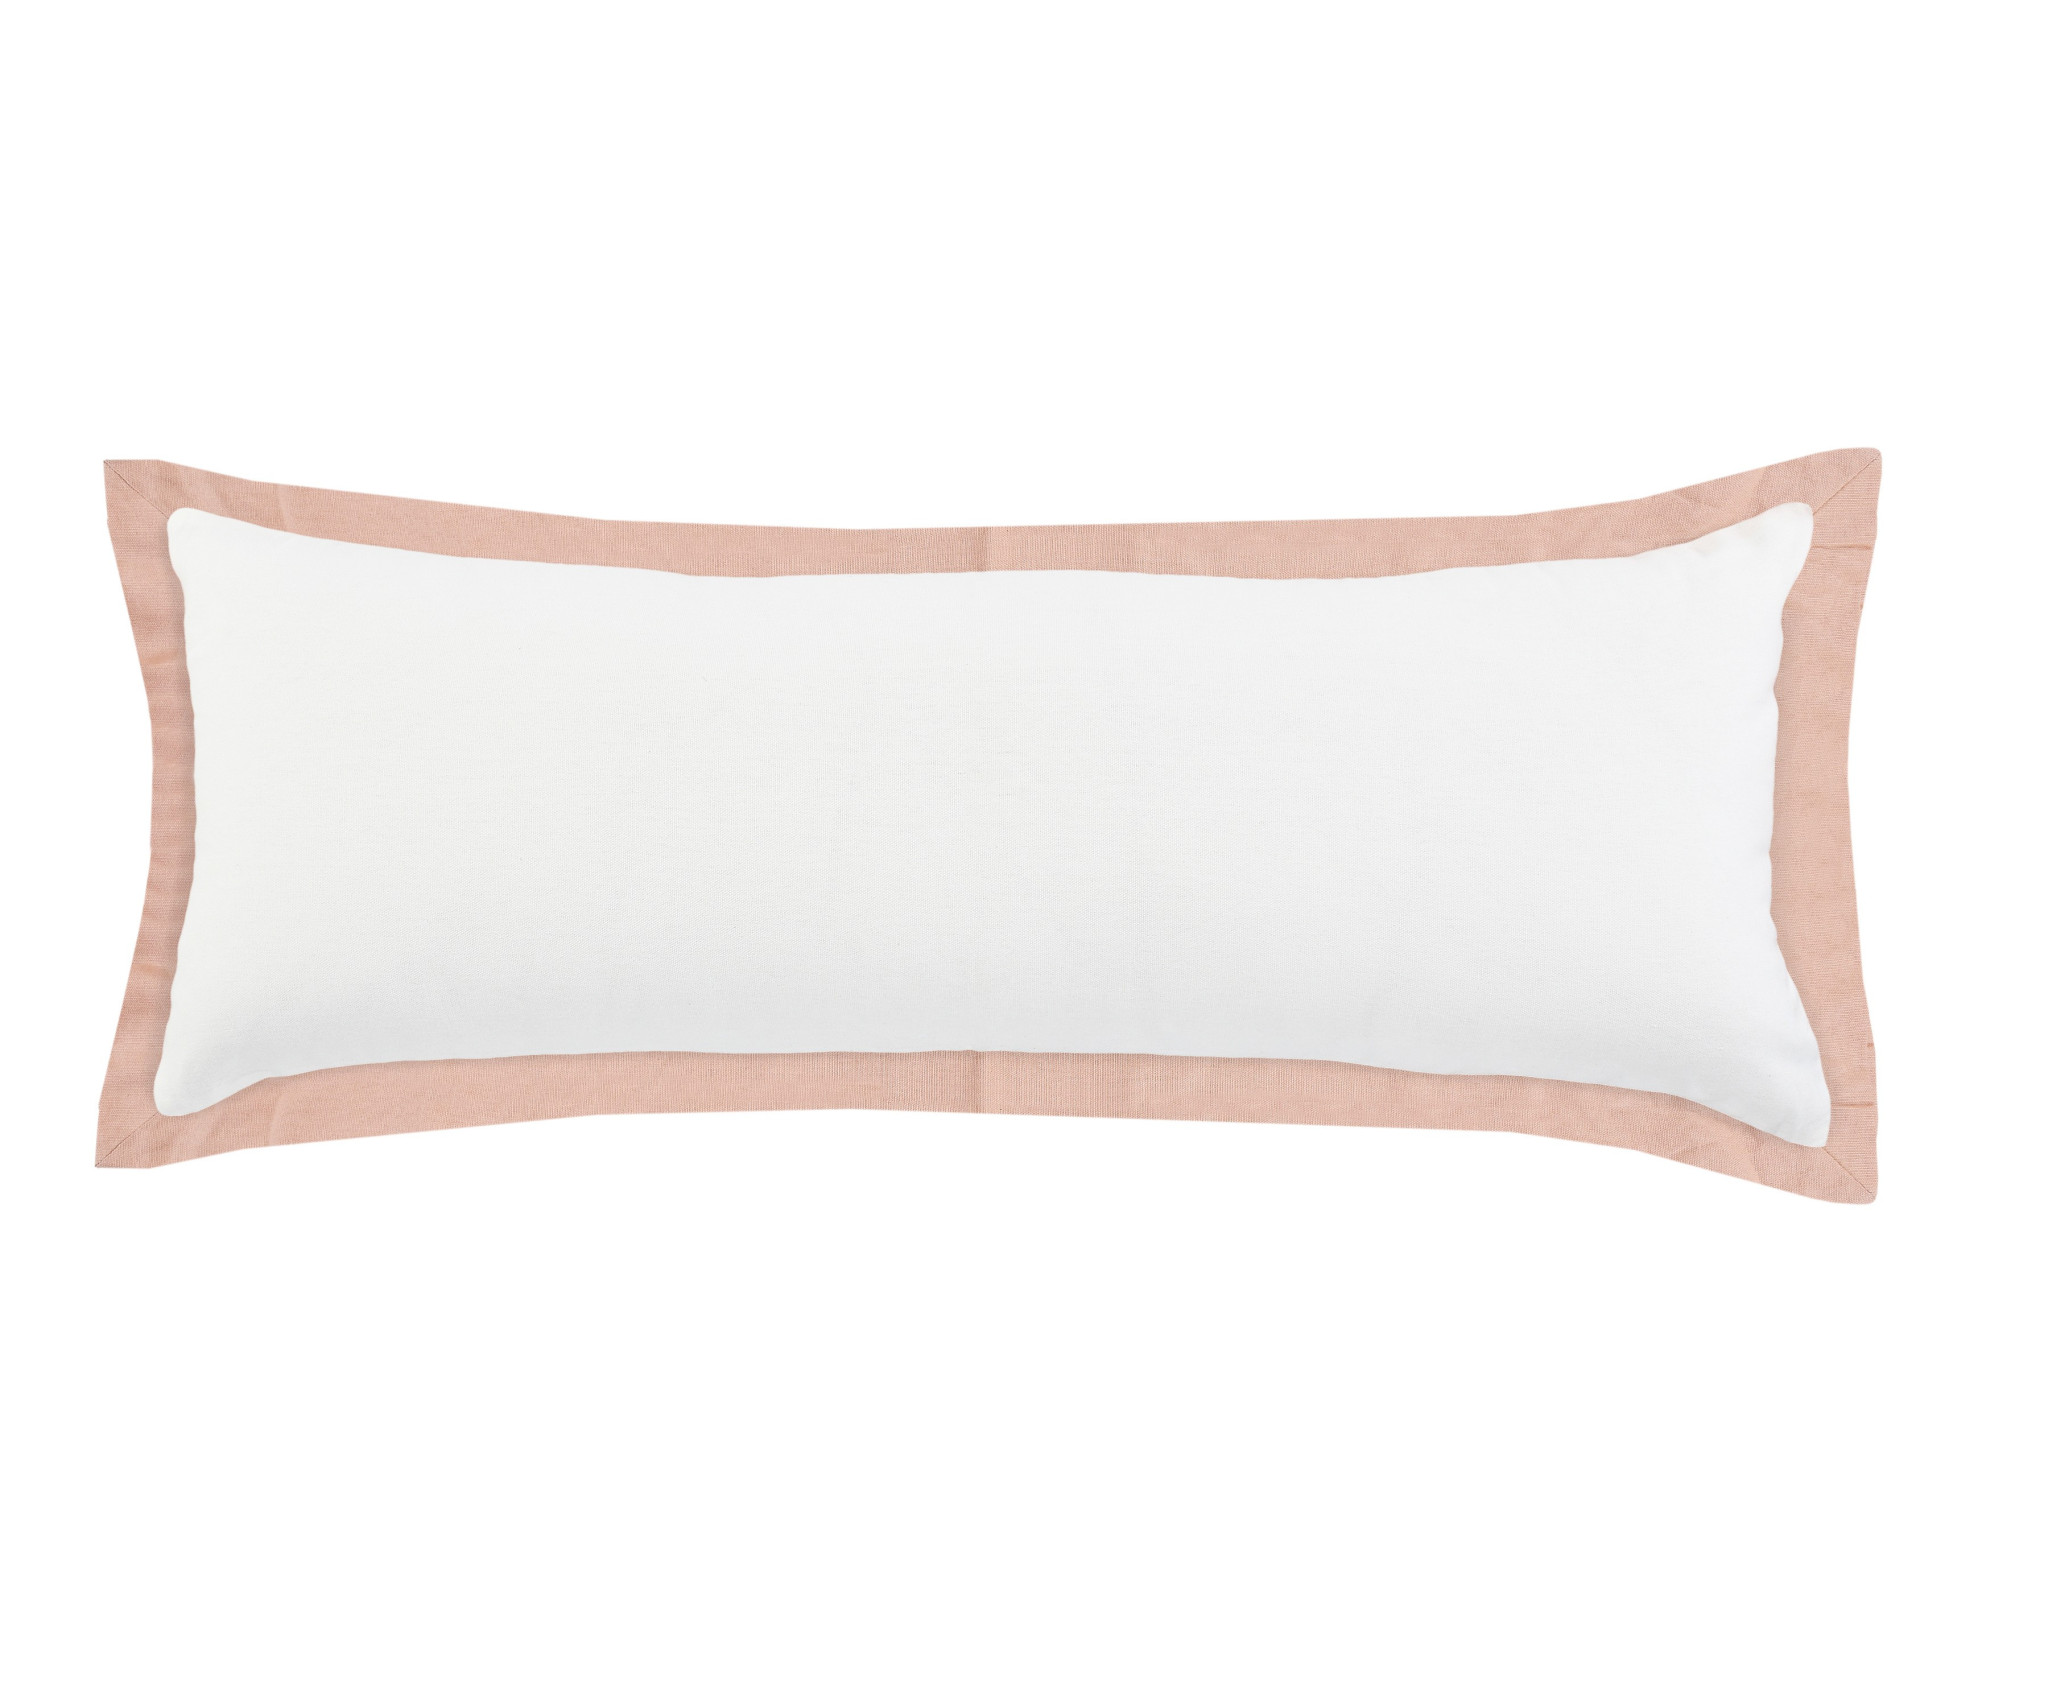 14" X 36" White And Light Pink 100% Cotton Geometric Zippered Pillow-517295-1